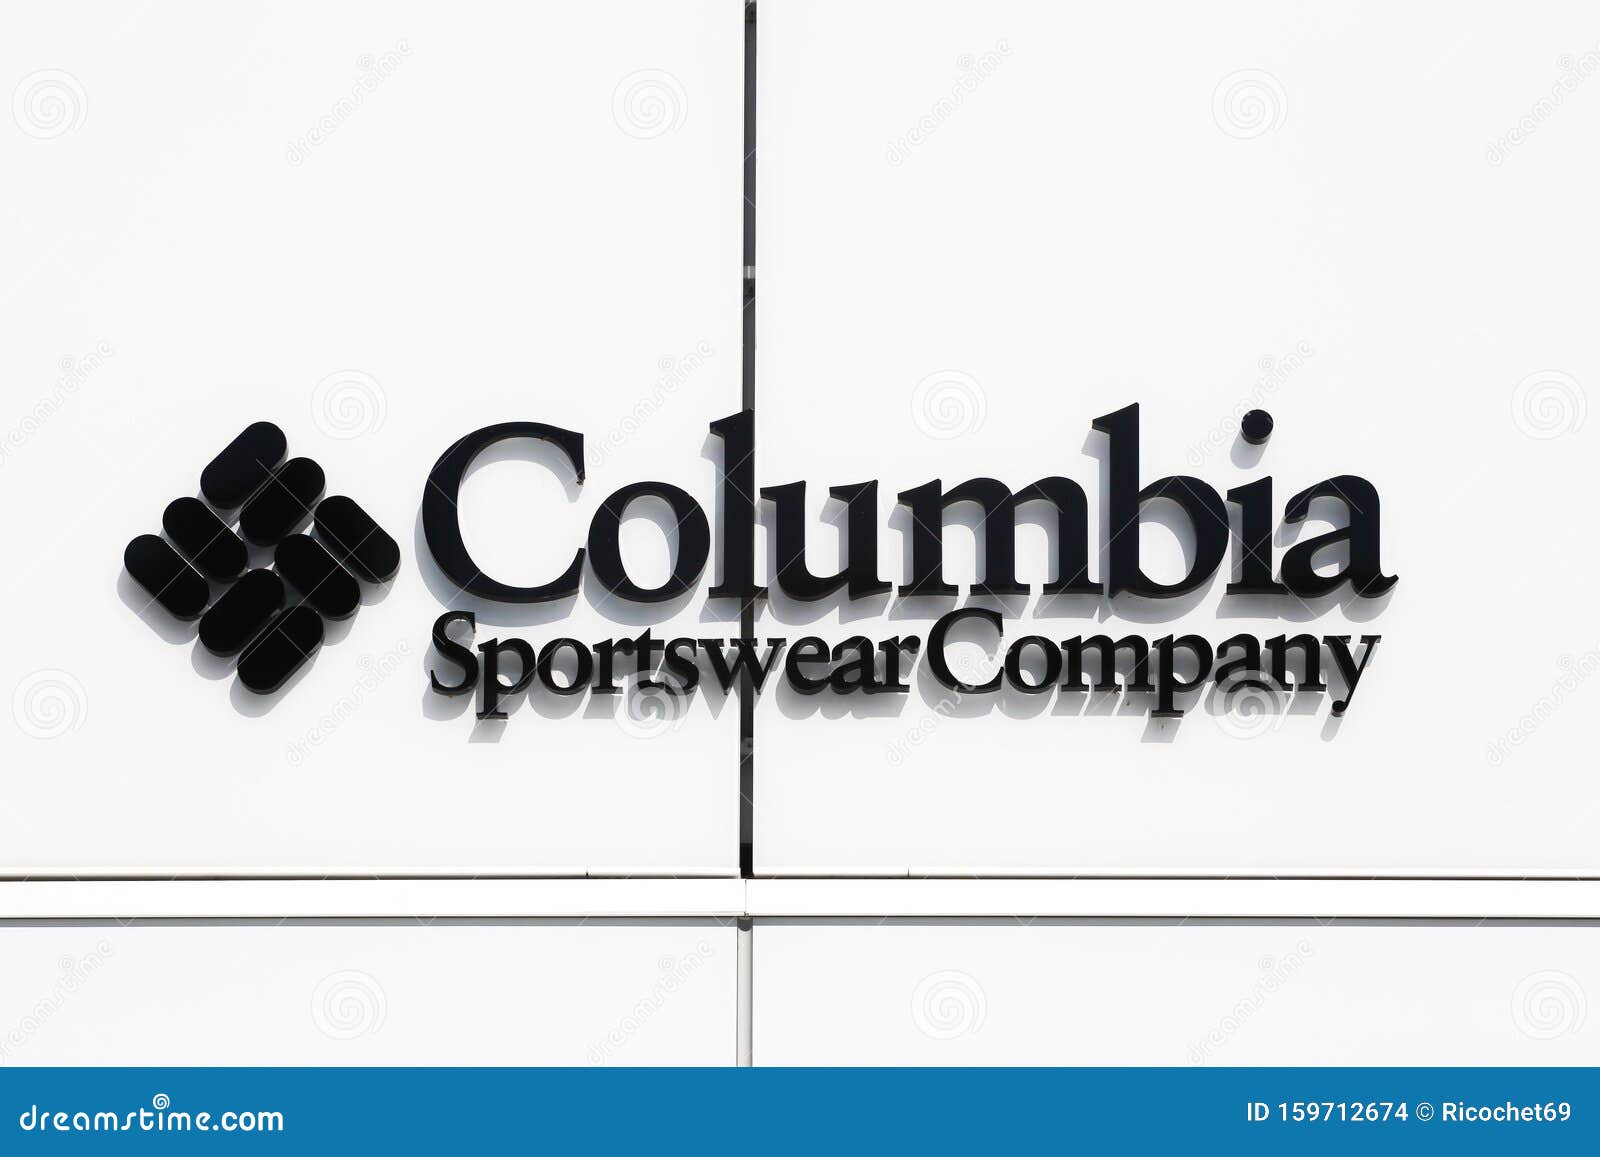 Columbia Sportswear Company Logo on a Wall Editorial Stock Image ...